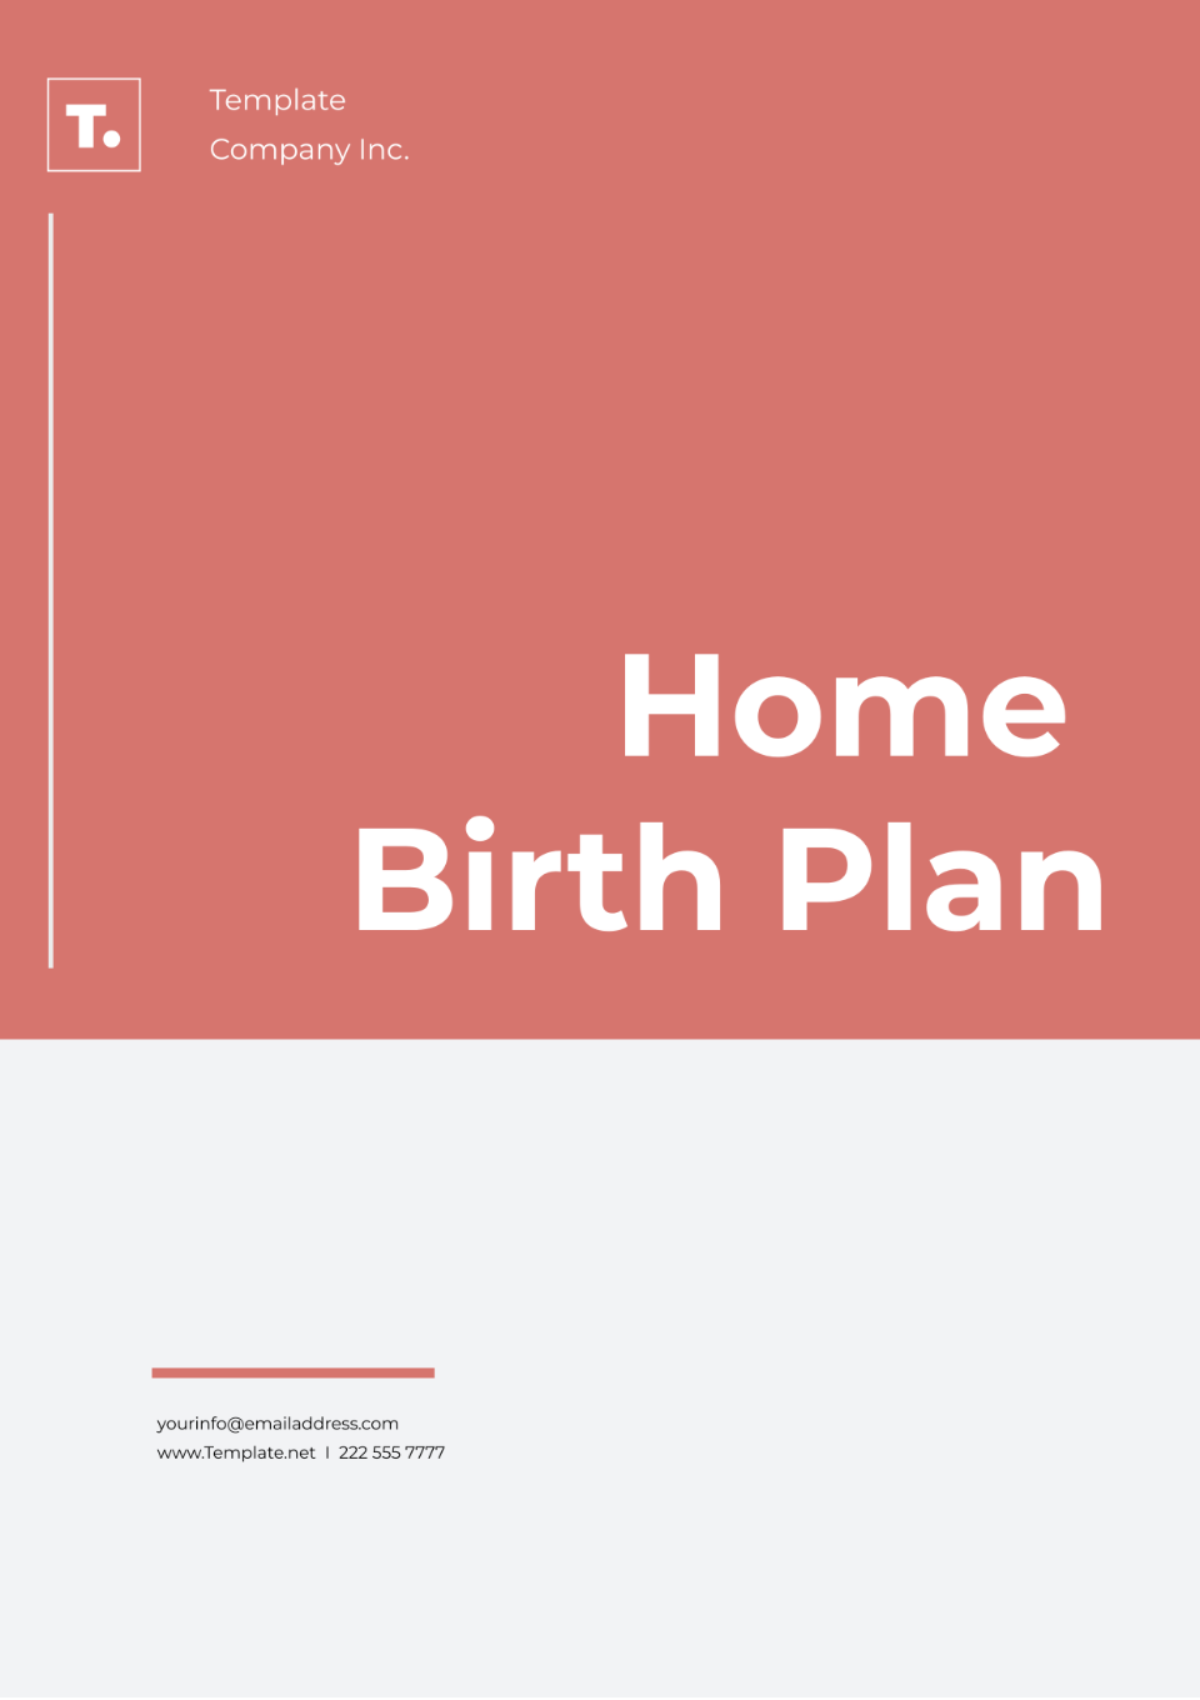 Home Birth Plan Template